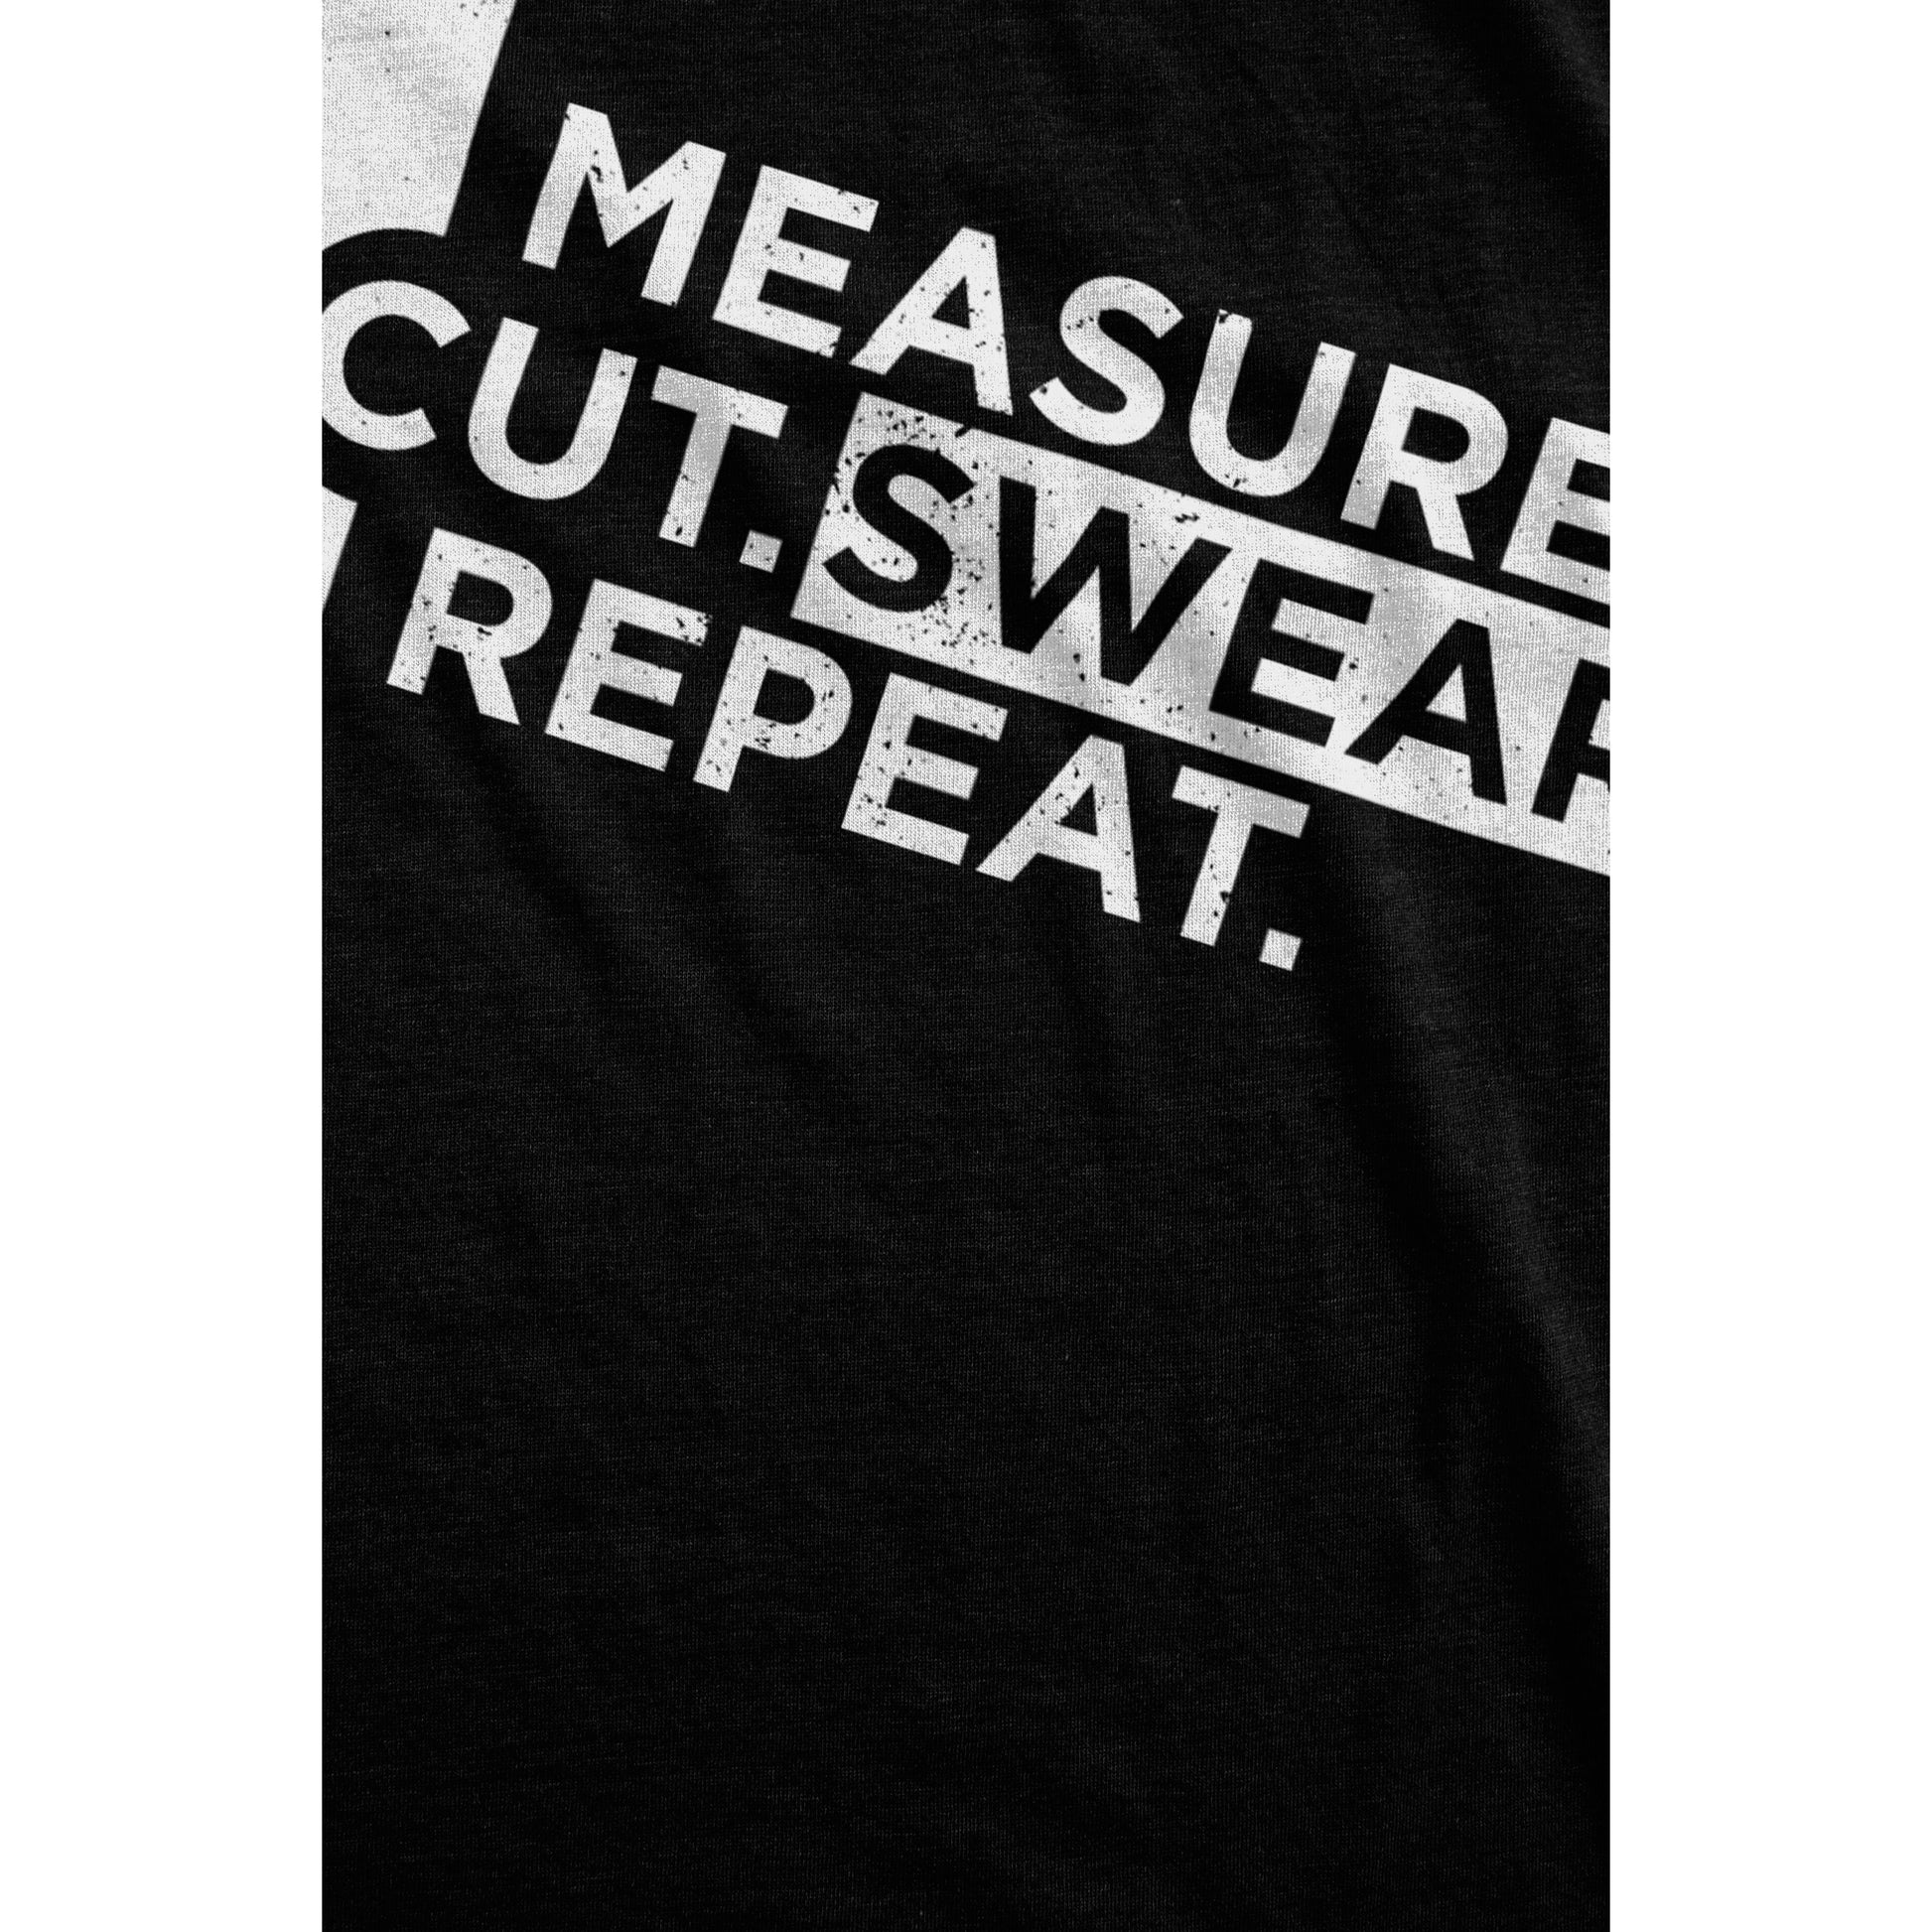 Measure. Cut. Swear. Repeat. - threadtank | stories you can wear